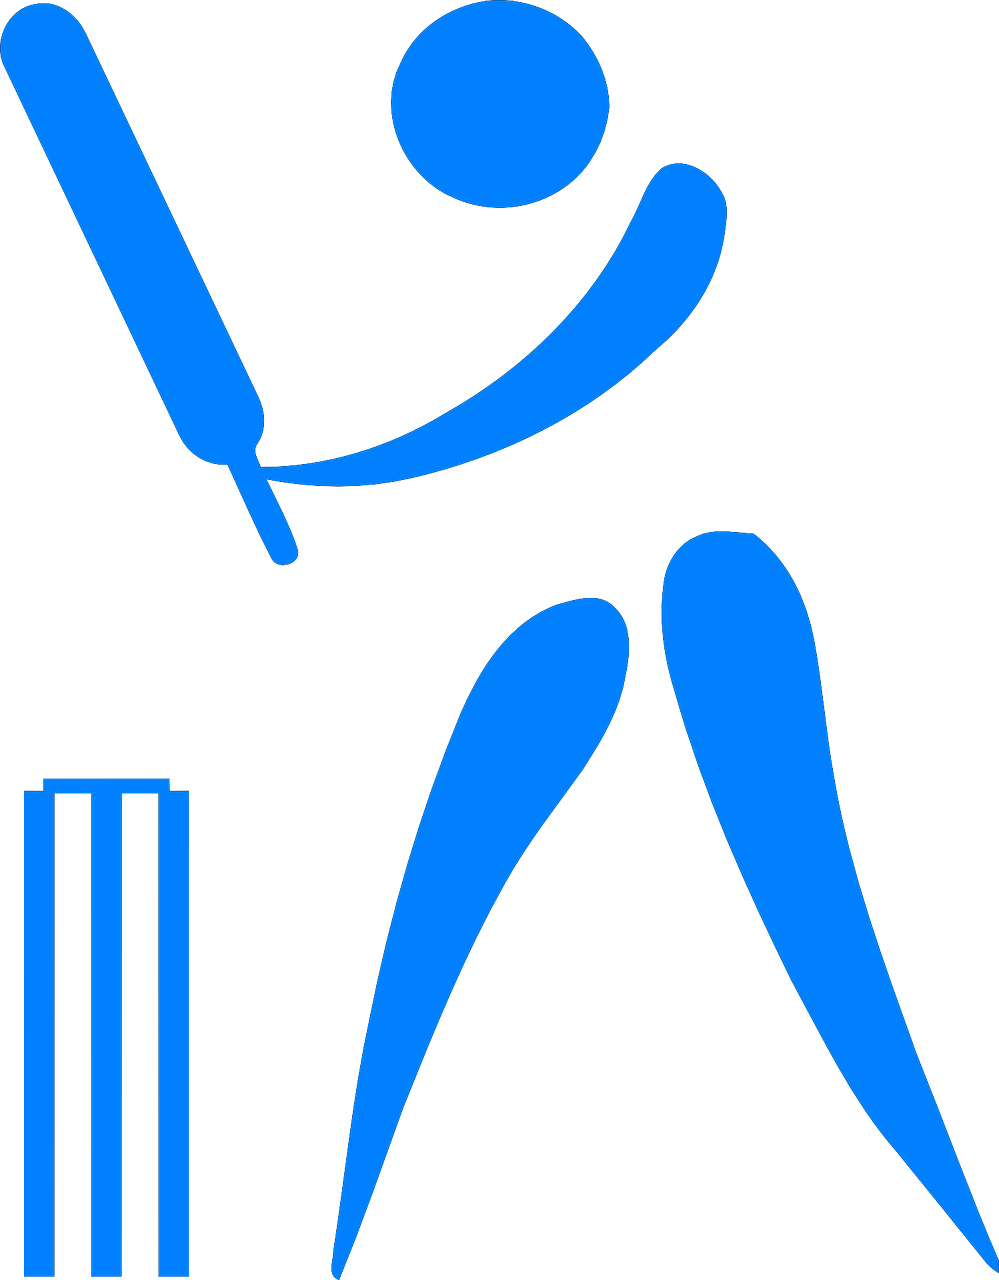 cricket bat ball free photo